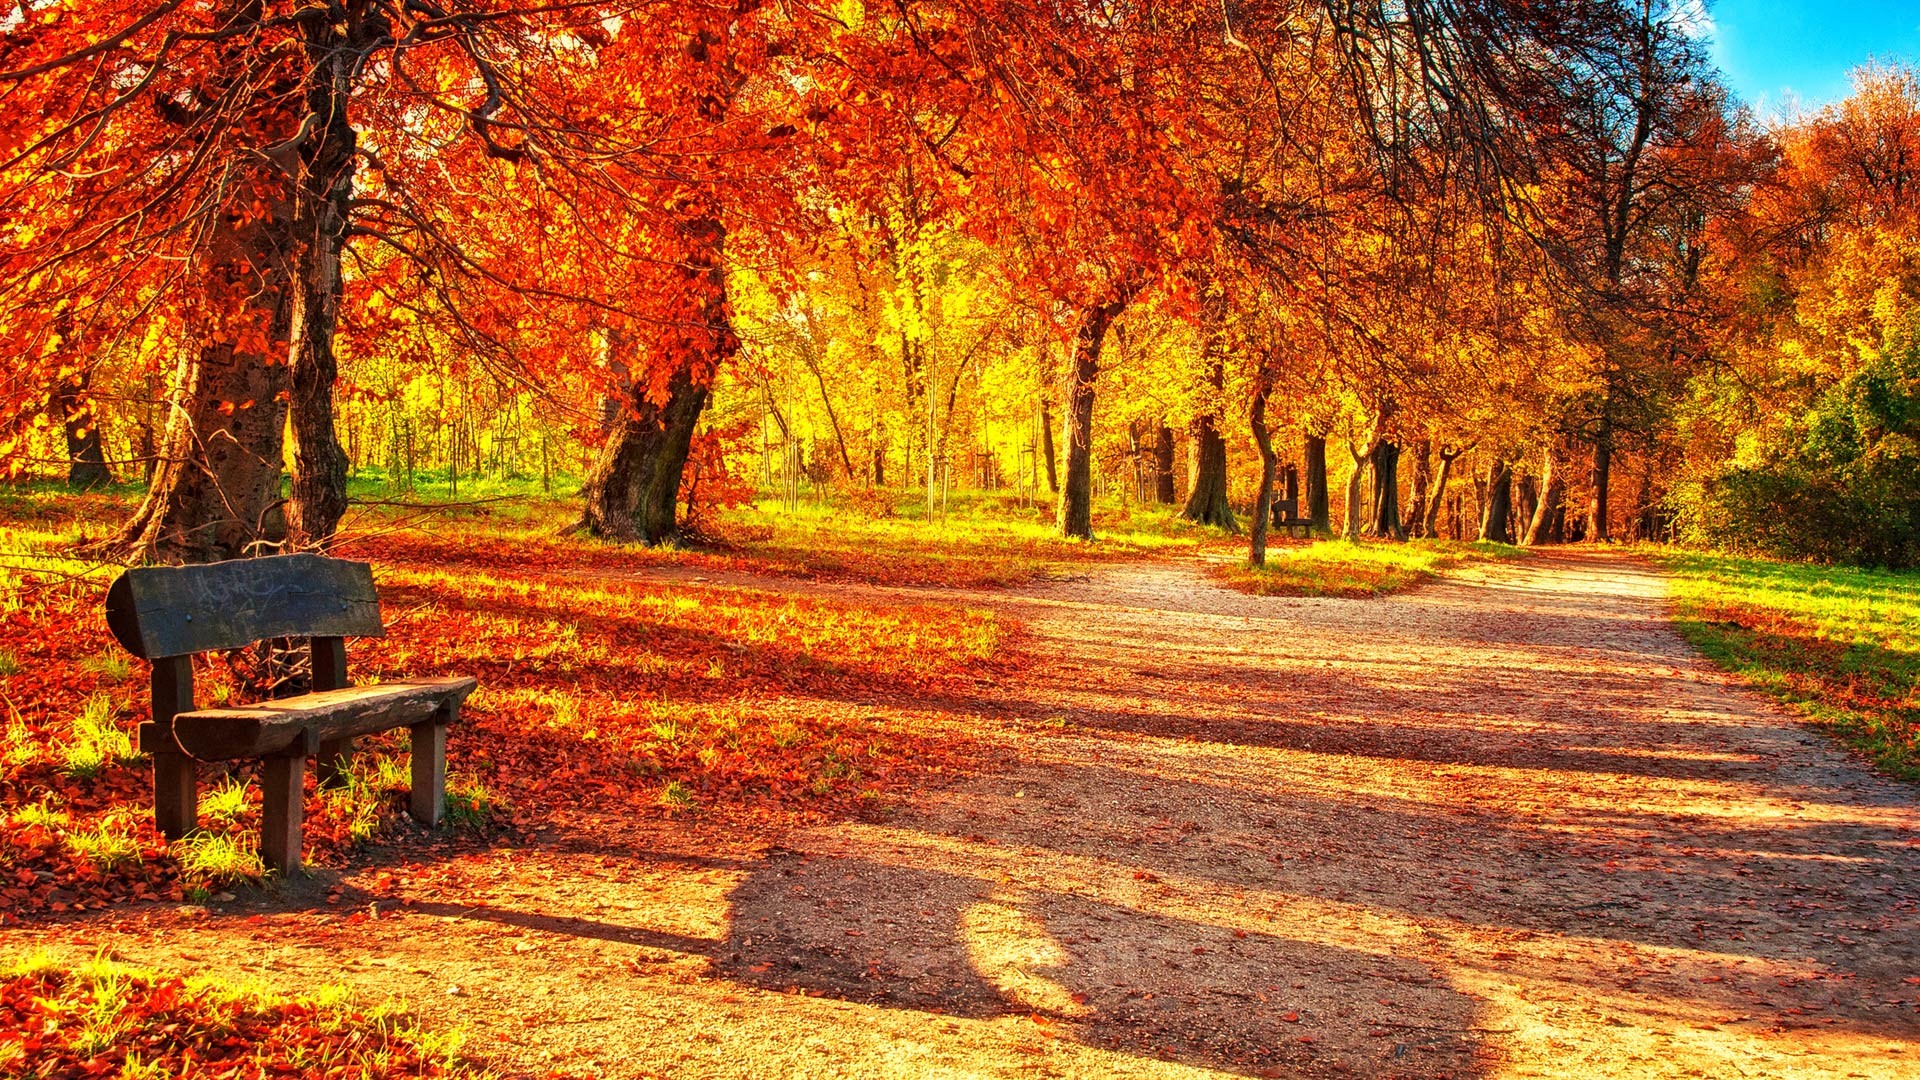 Download Autumn Leaves Wallpaper Desktop #x0ray hdxwallpaperz.com